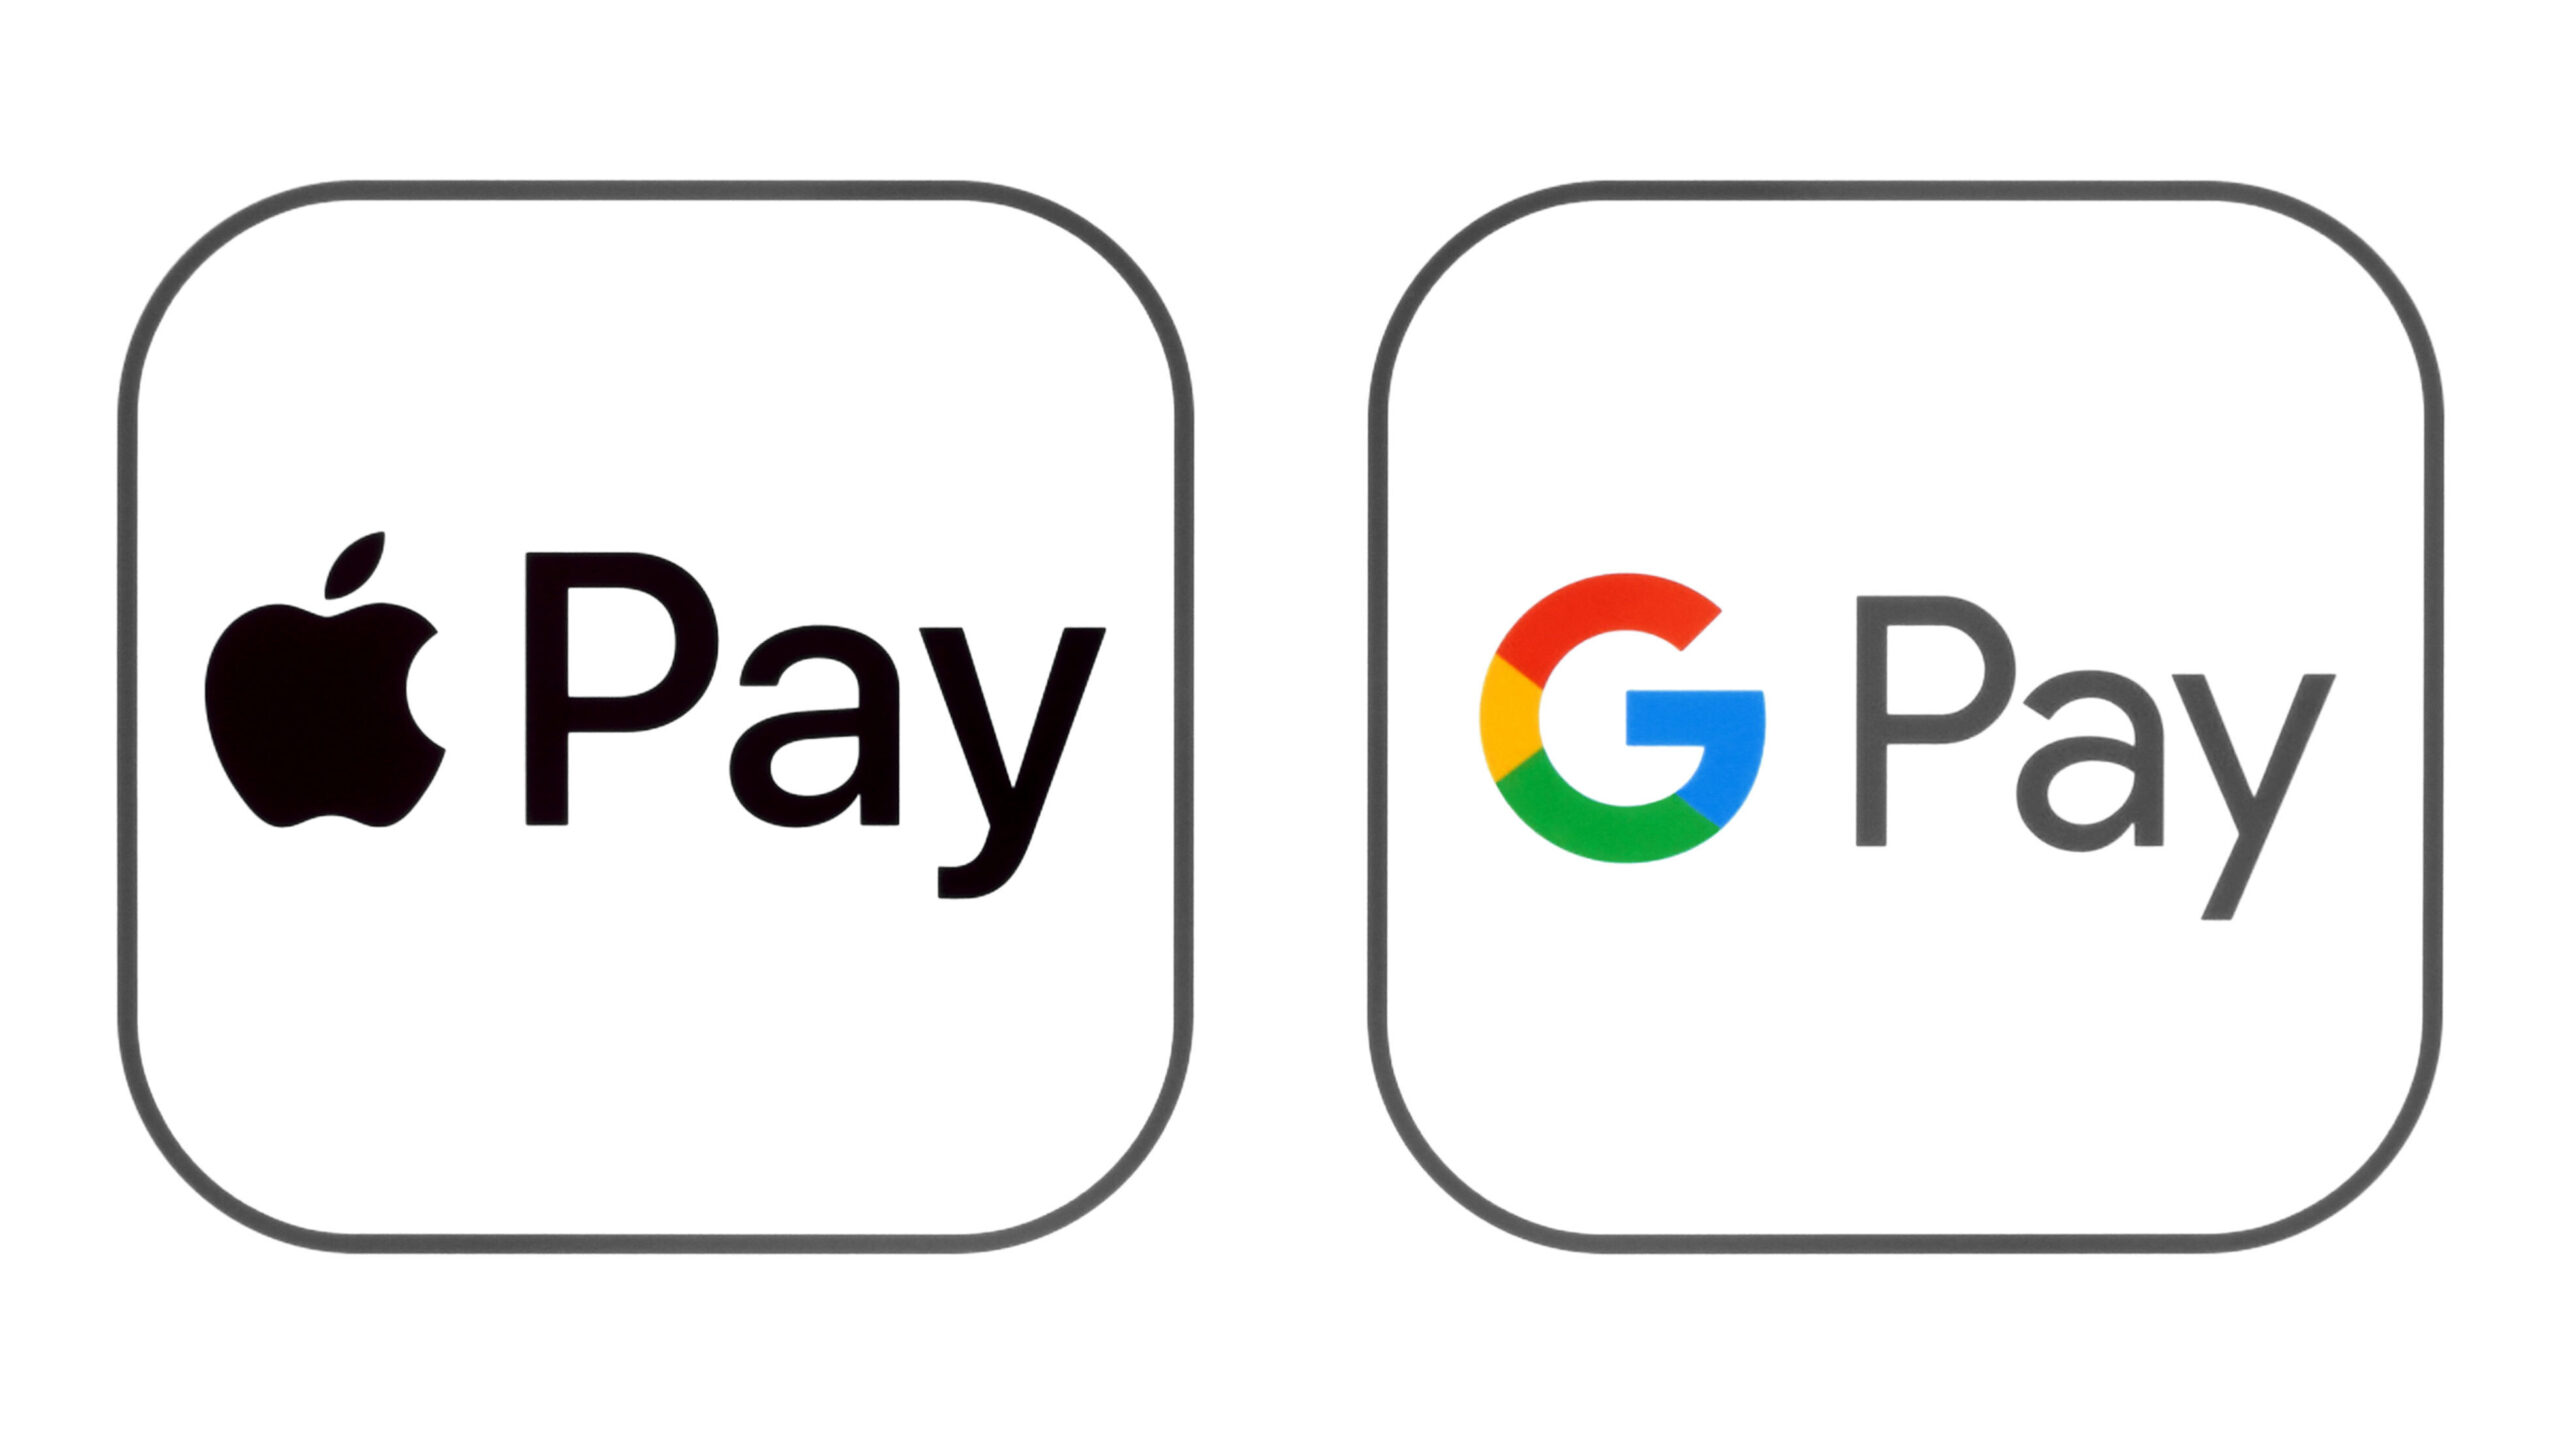 Google/Apple Pay